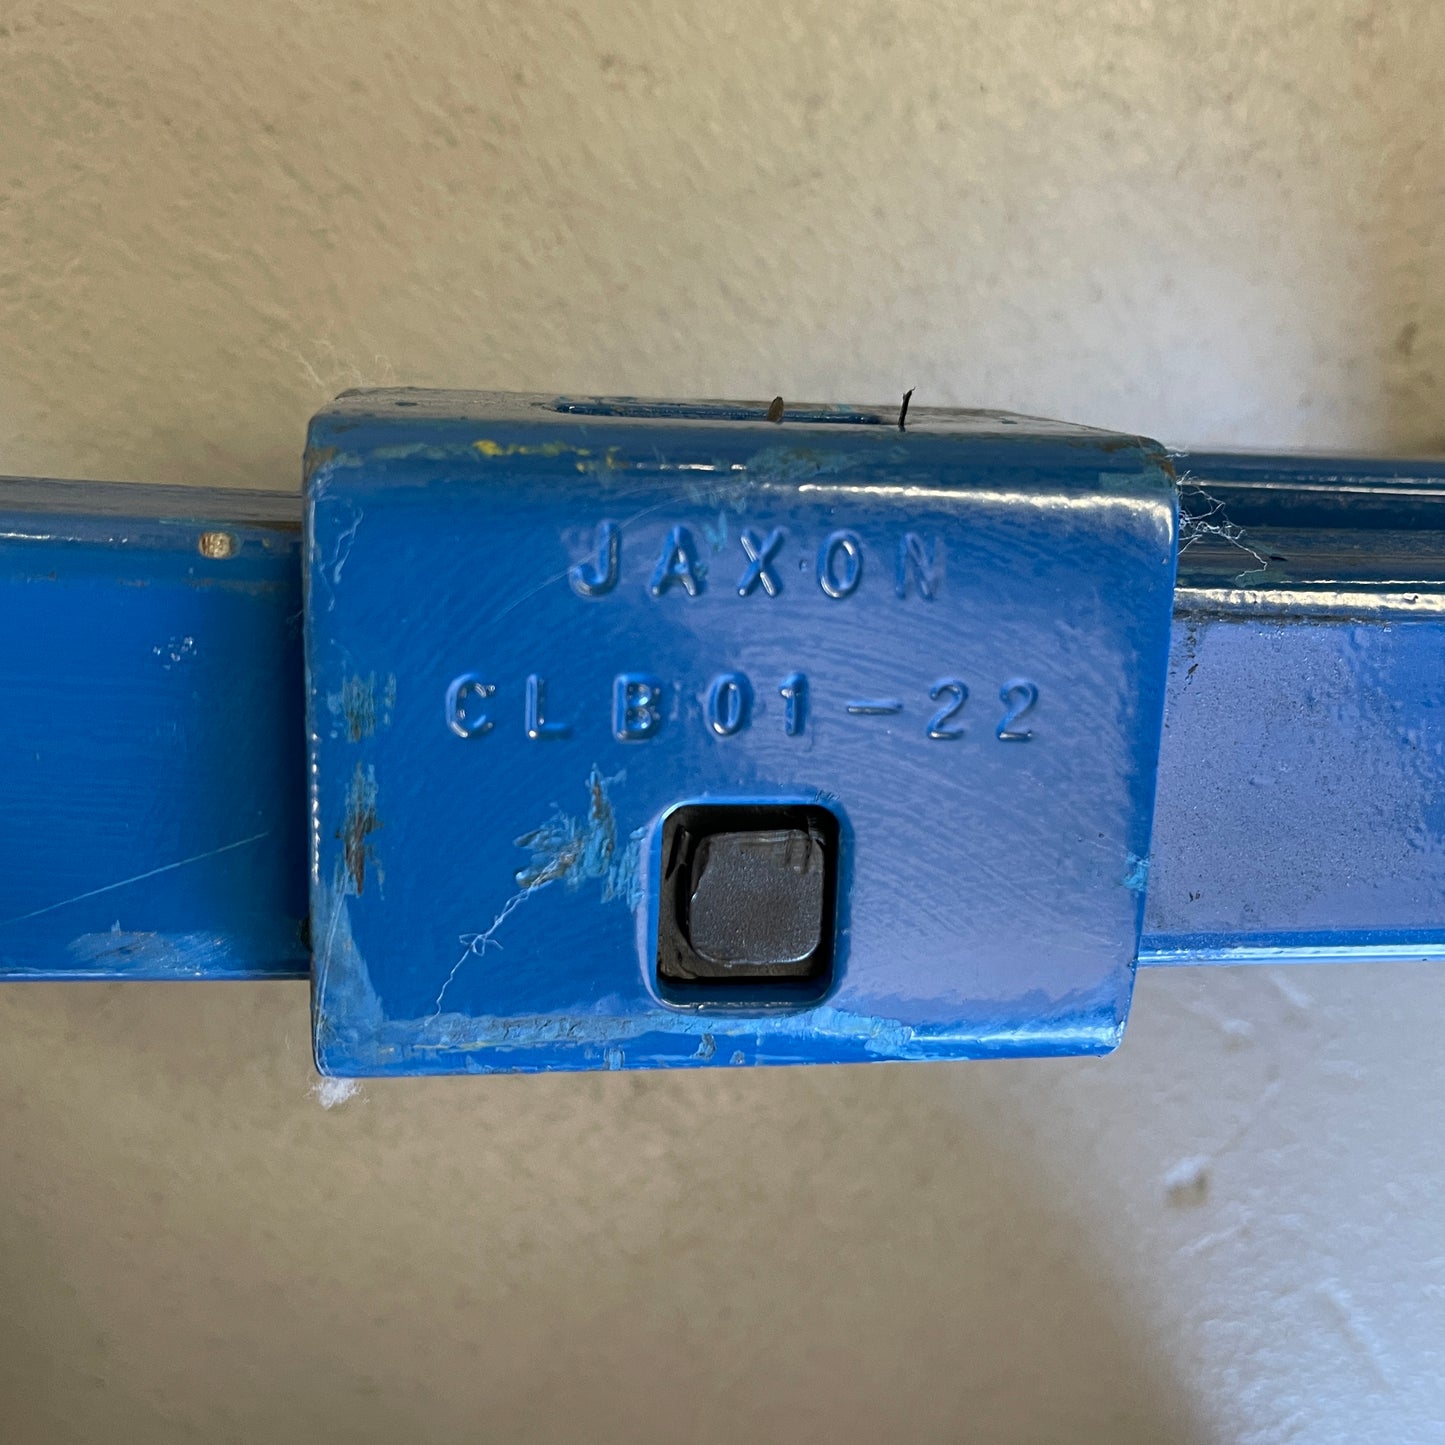 Pallet of JAXON Railway Uncoupling Levers Group C1 Telescoping Blue (New)